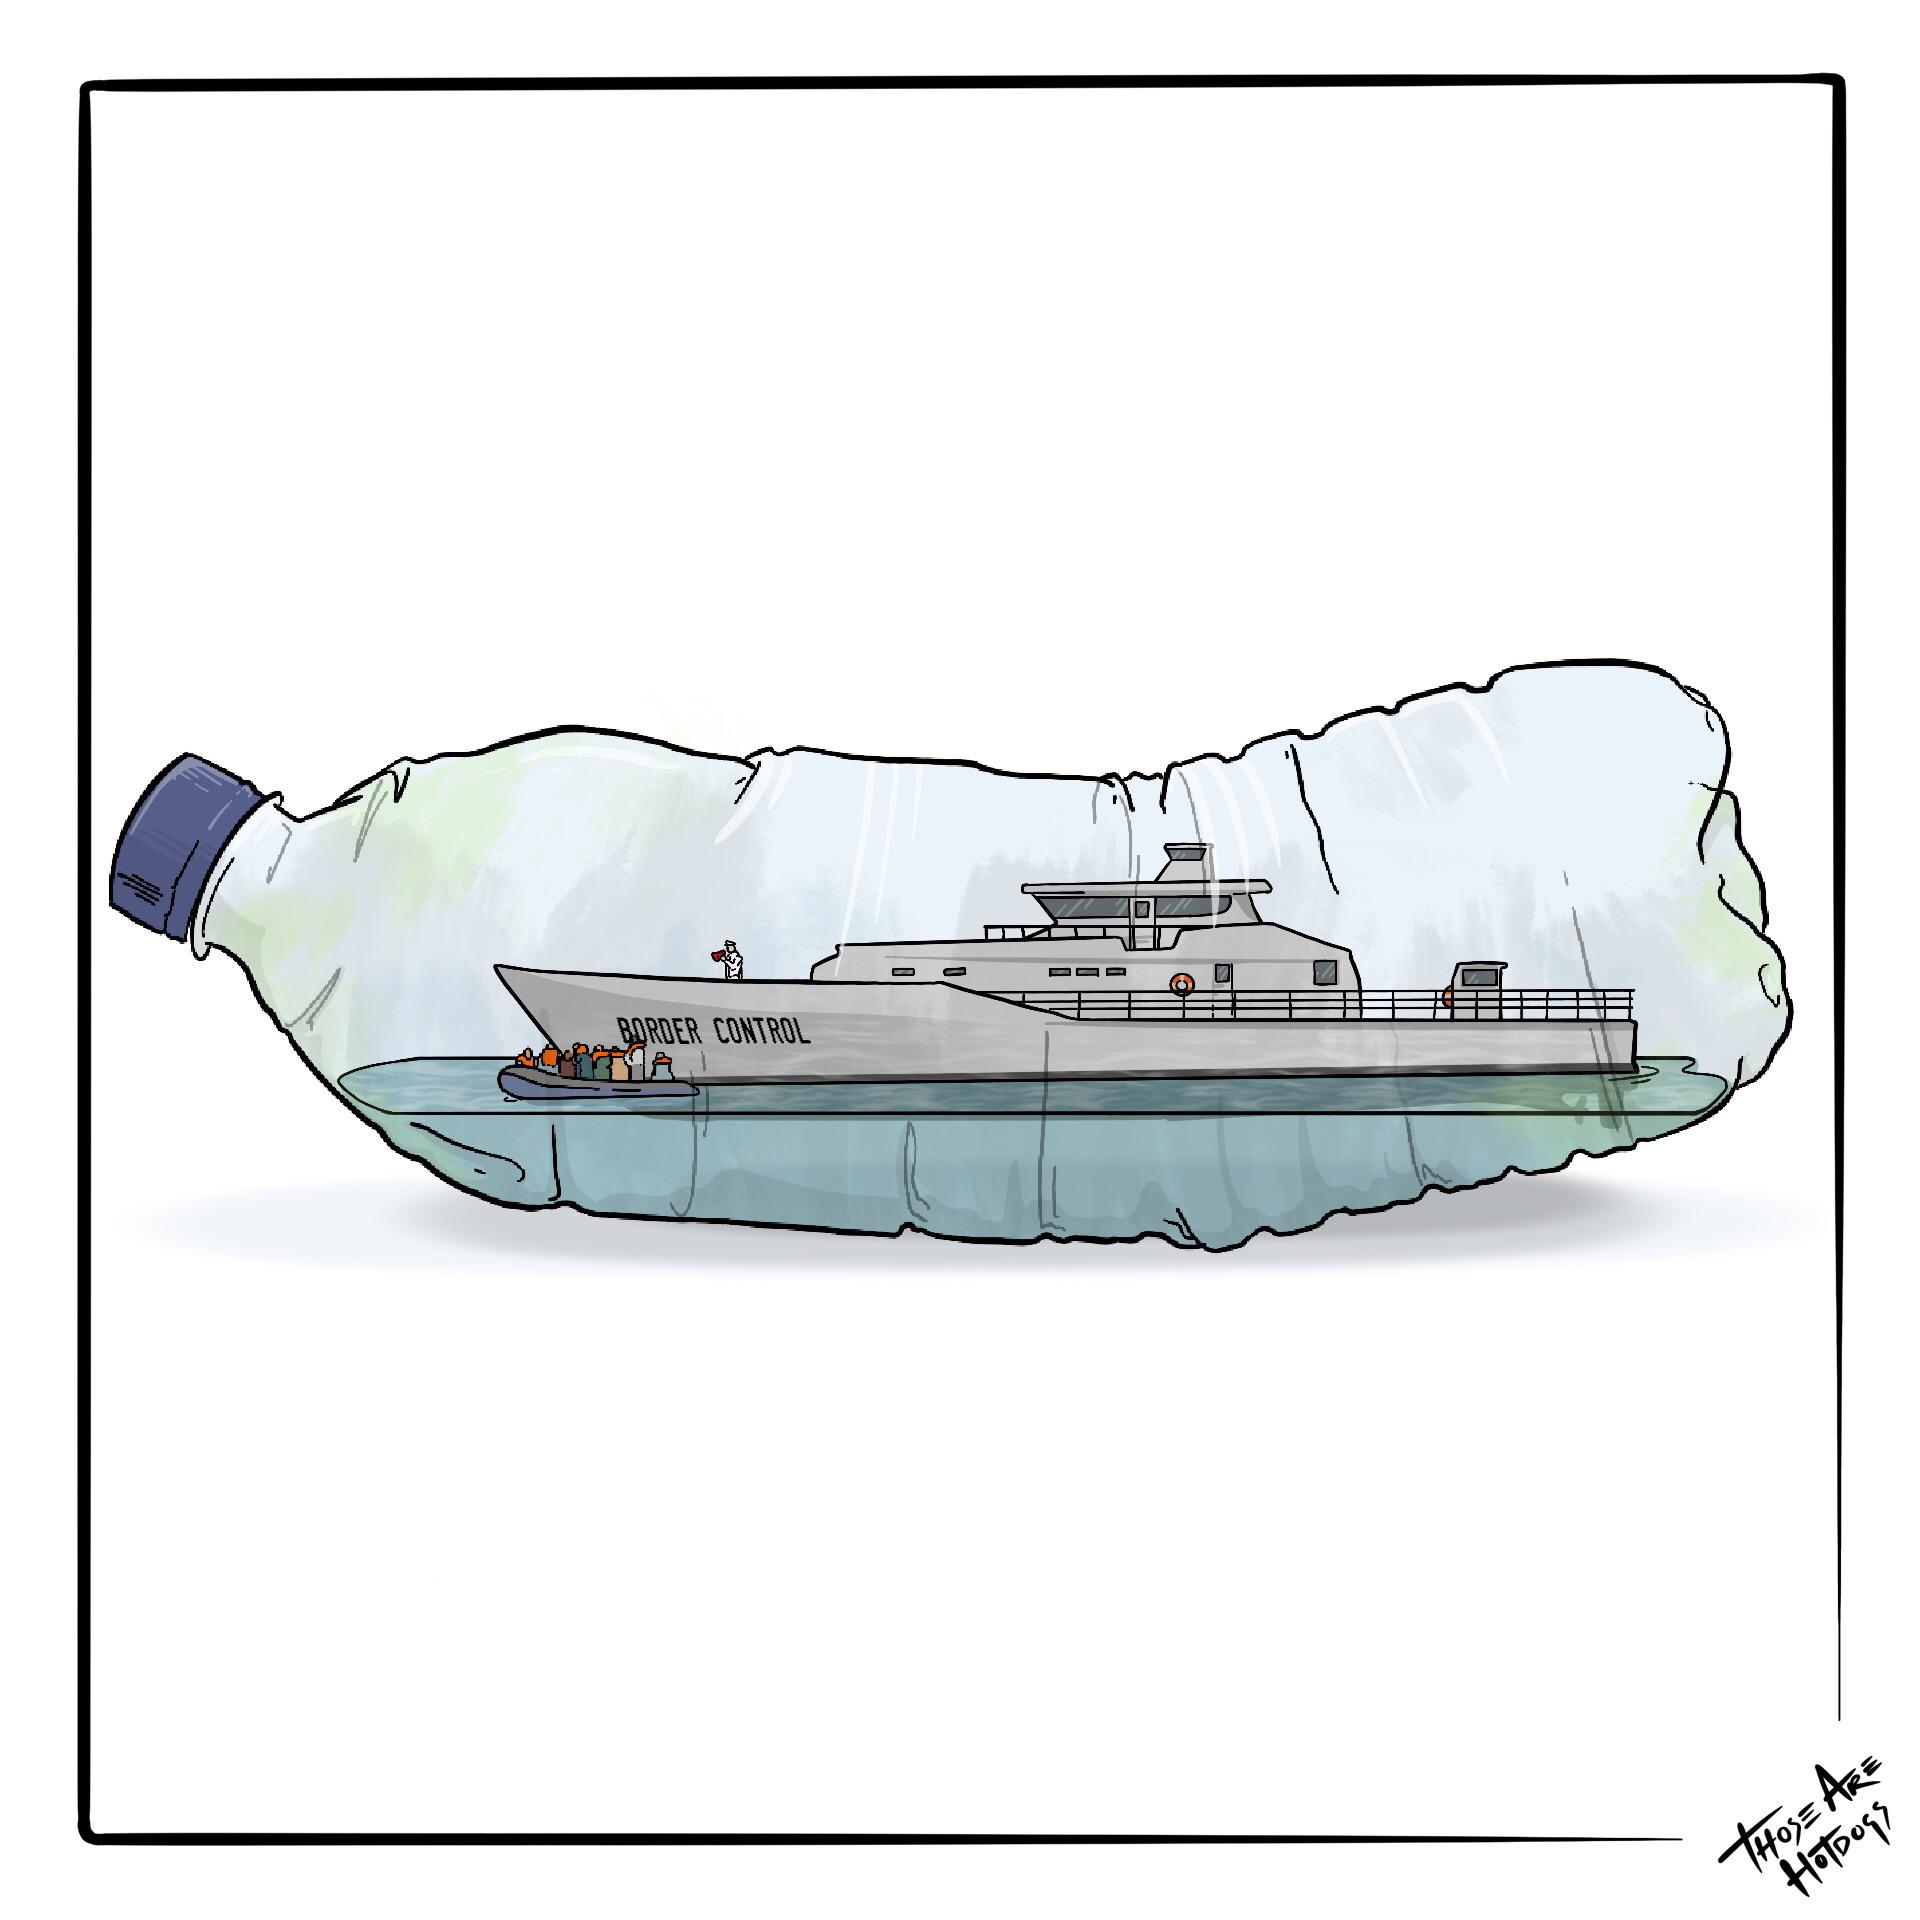 The modern ship in a bottle.